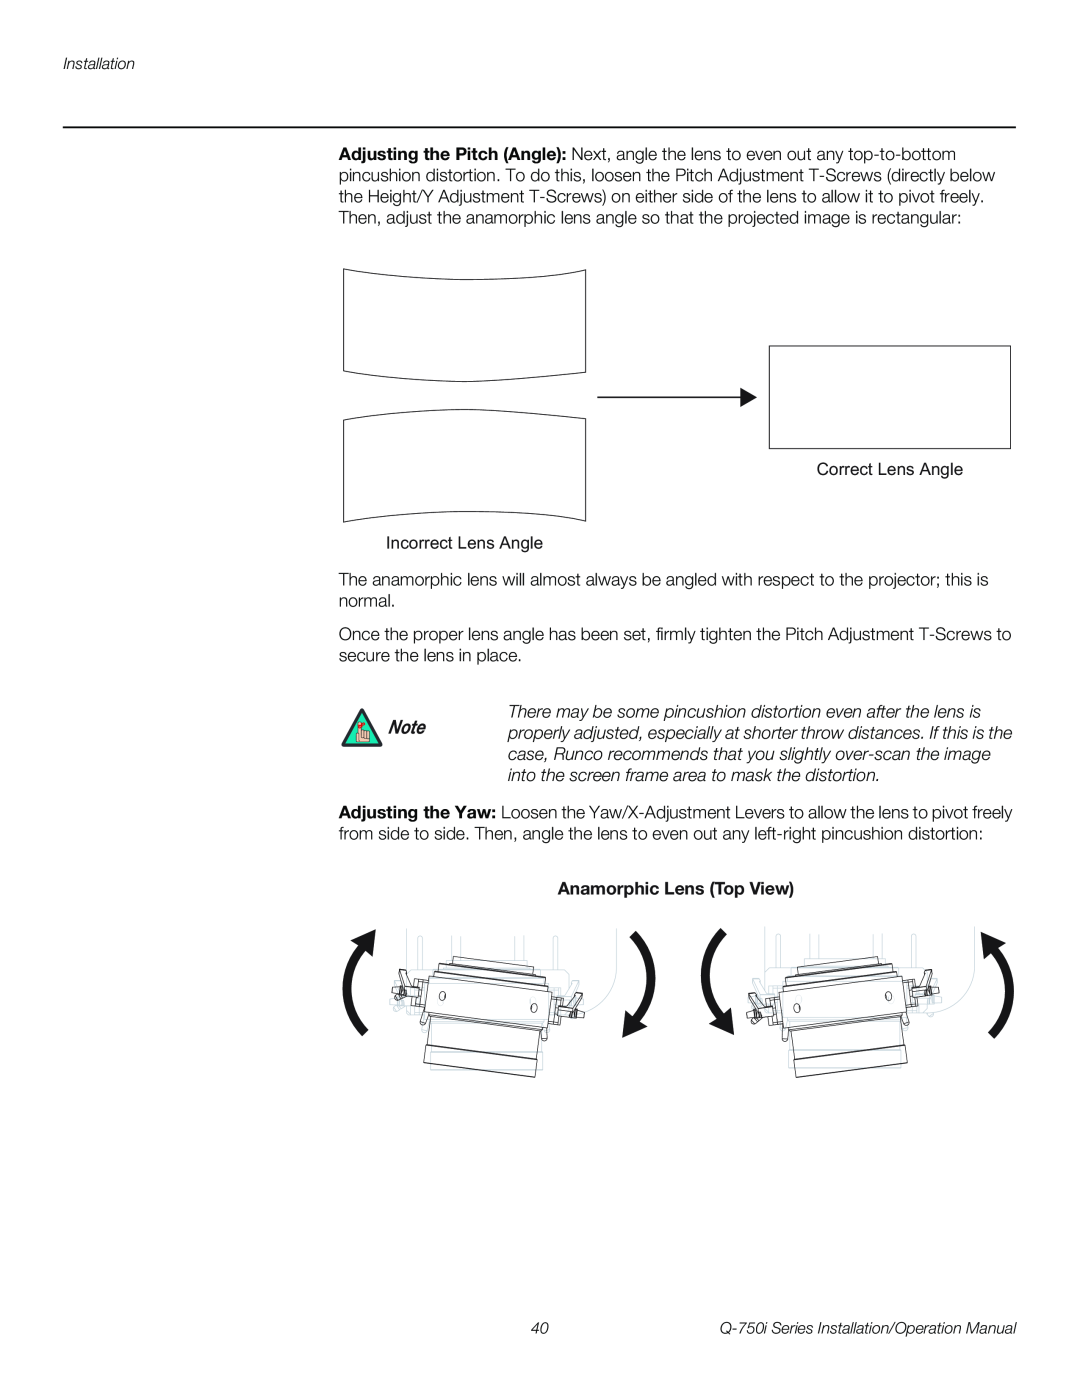 Runco Q-750I operation manual Anamorphic Lens Top View 